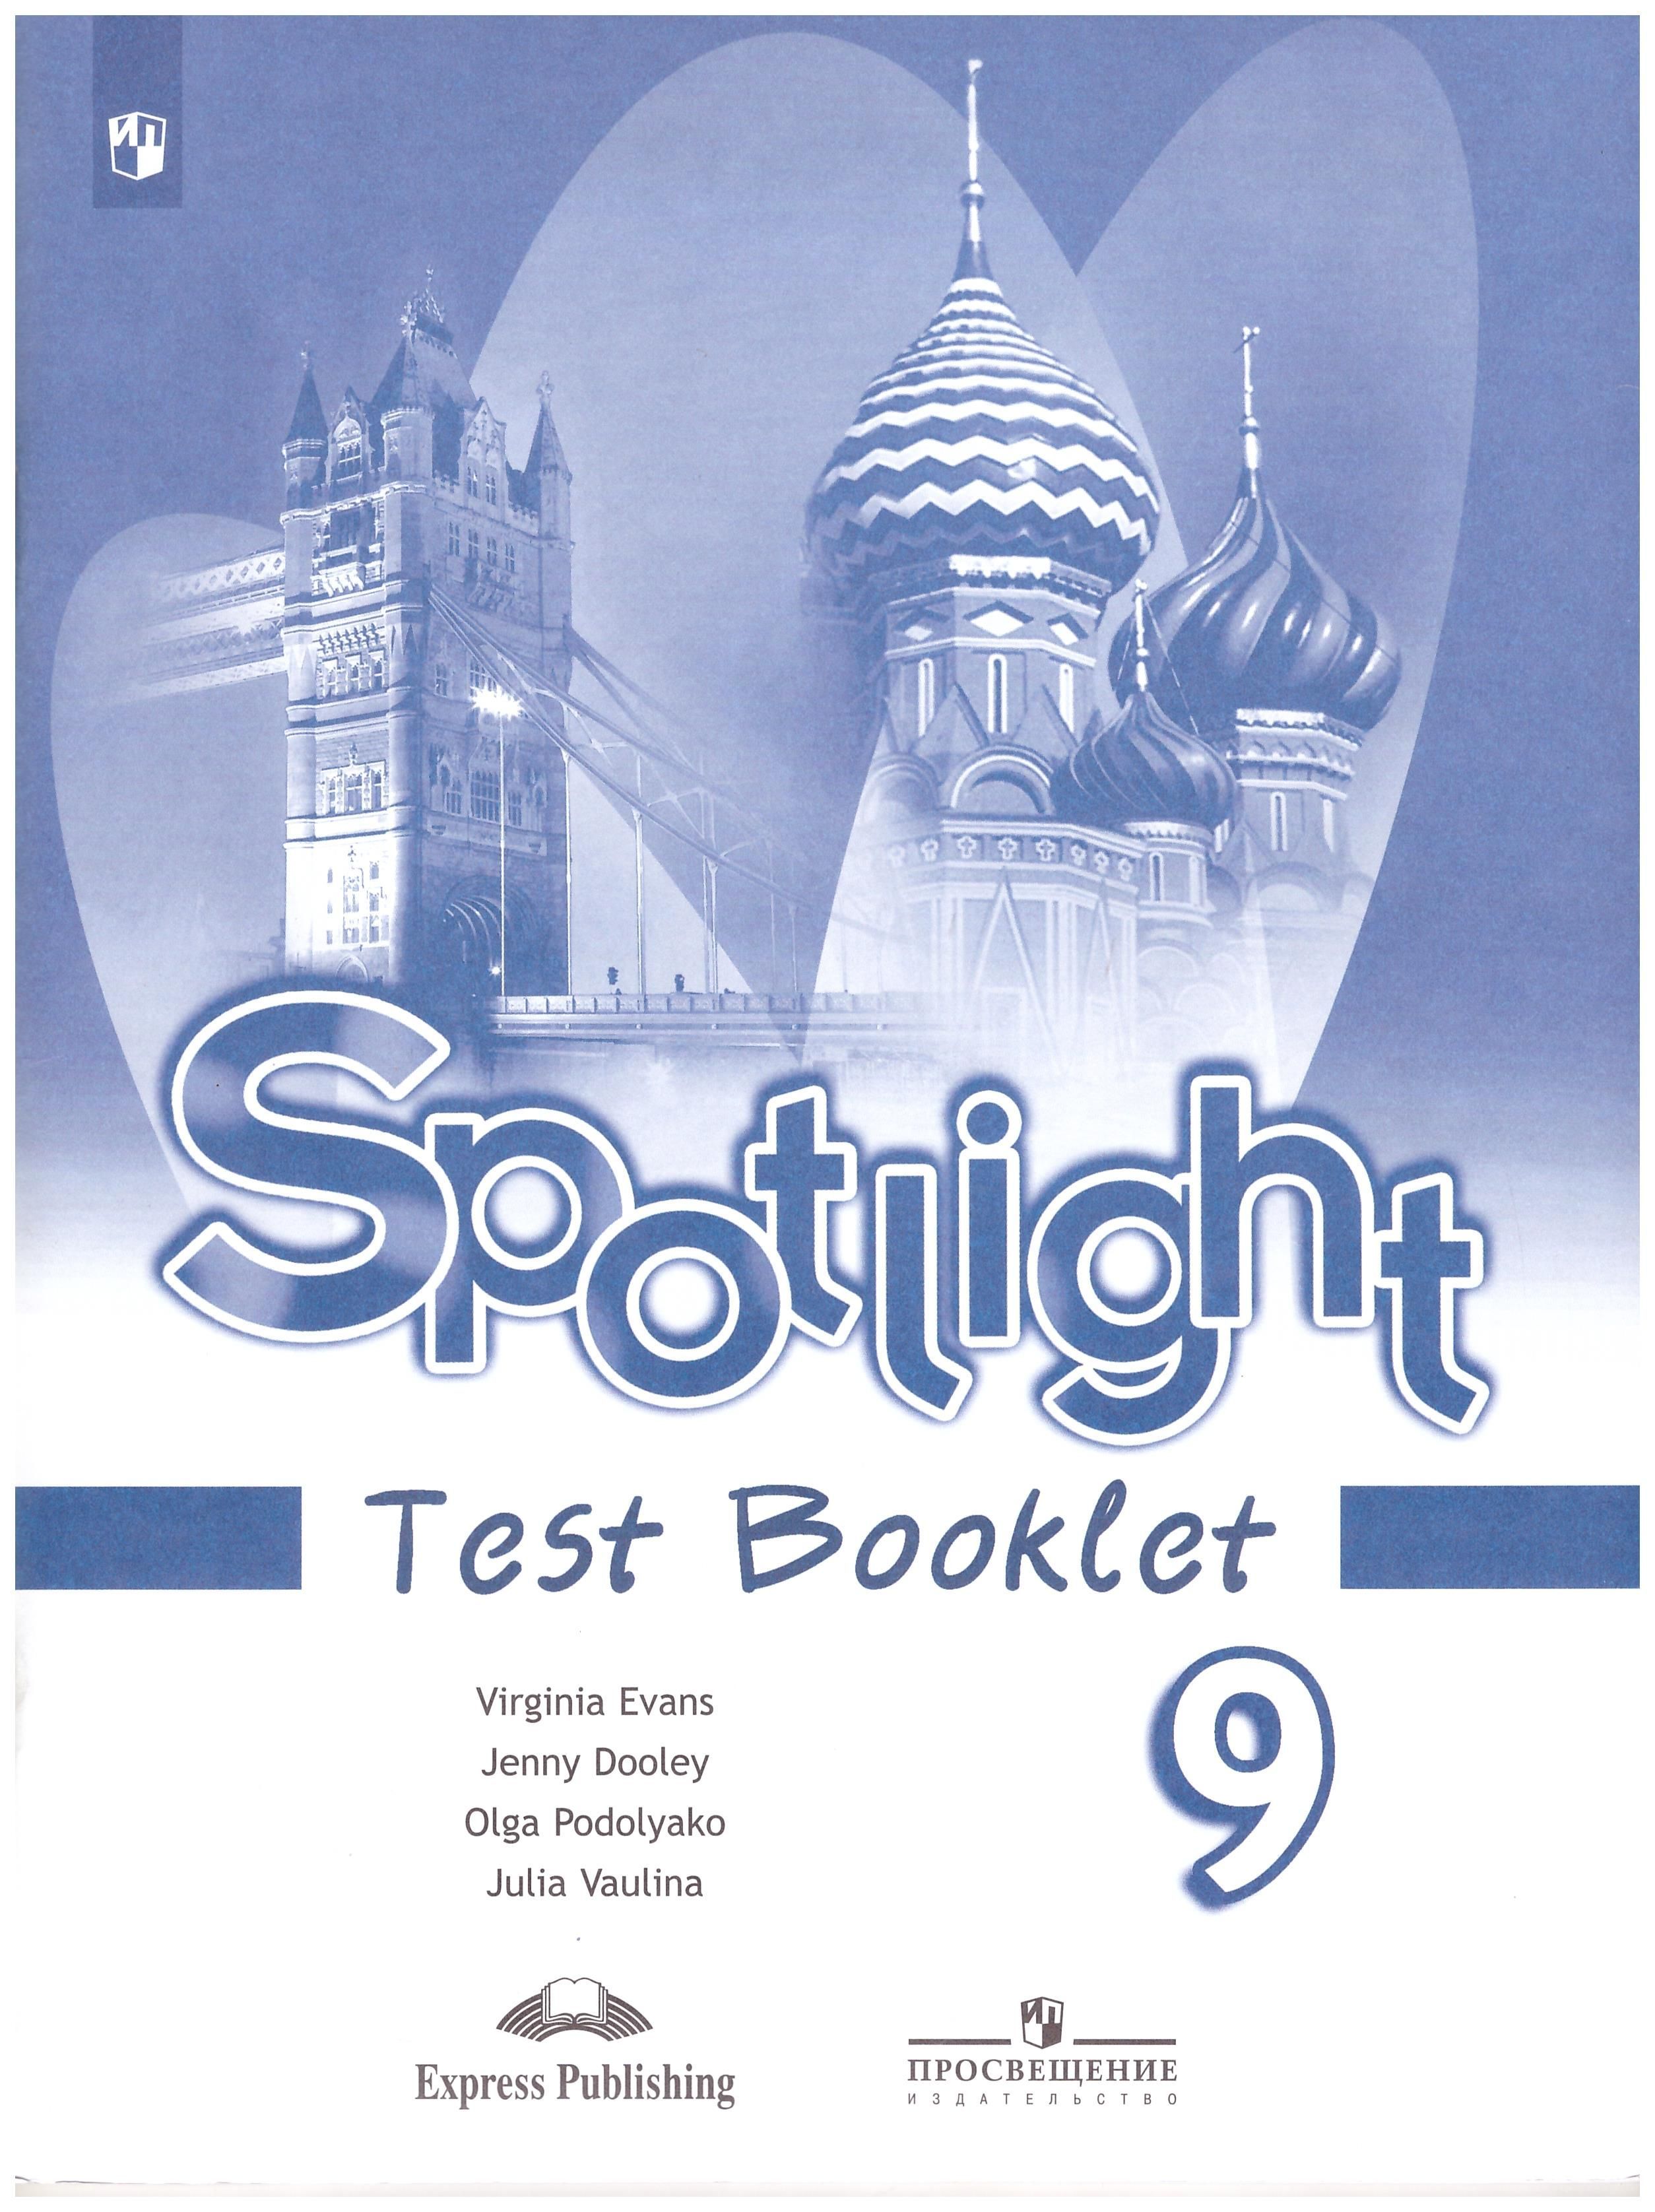 Английский 9 класс тест спотлайт. Test booklet 9 класс Spotlight ваулина. Английский язык 9 класс ваулина тест буклет. Спотлайт 11 класс тест буклет. Спотлайт 9 класс тест буклет.